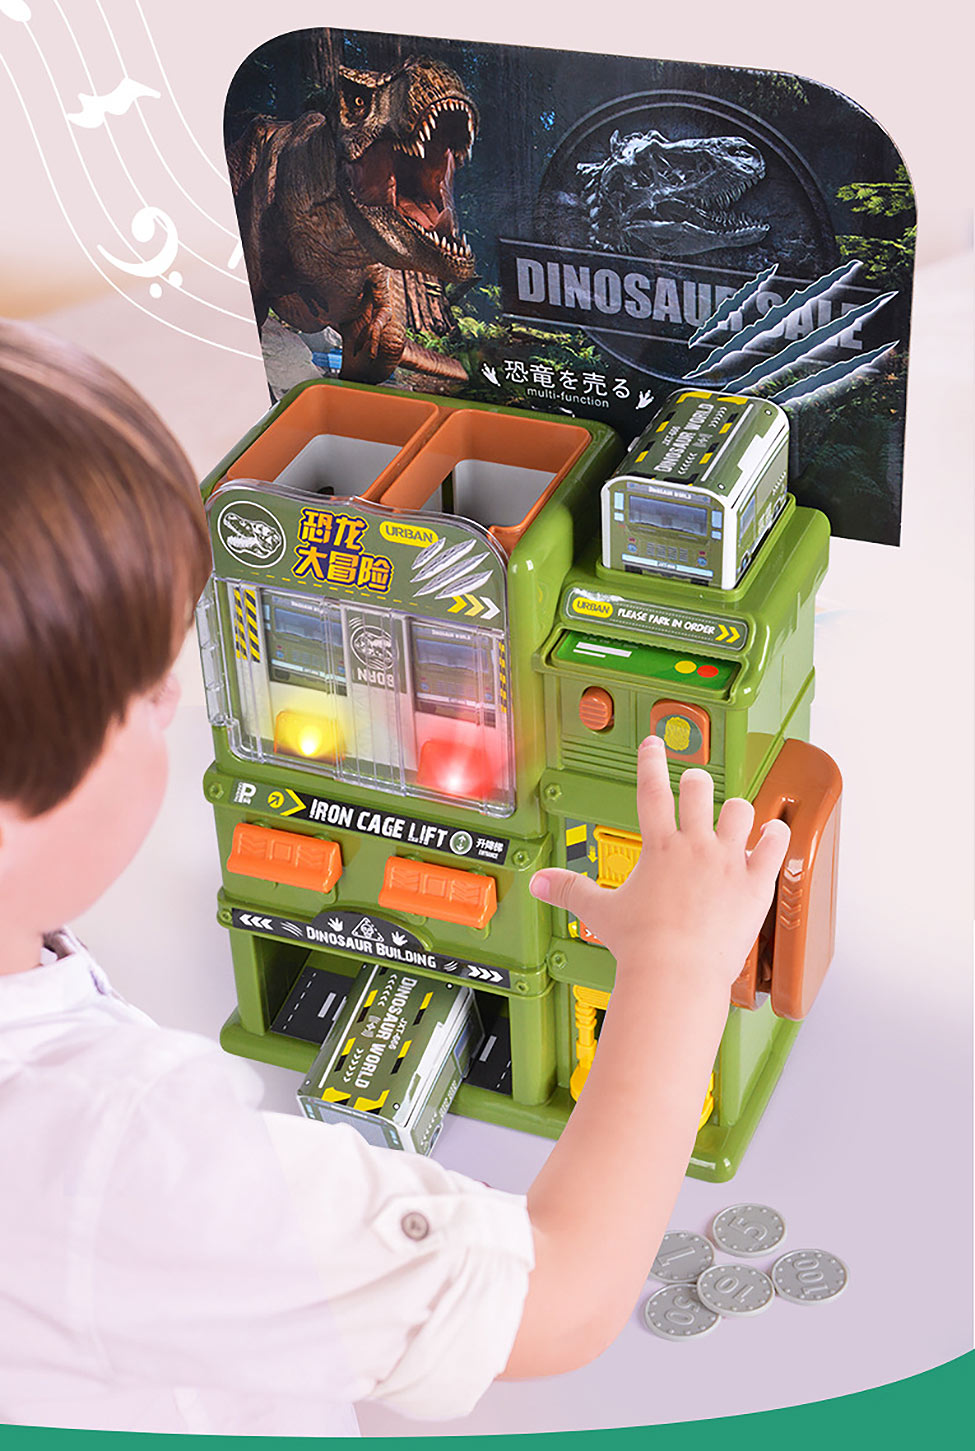 Automatic-Dinosaur-Building-Vending-Machine-Toy-with-10-Dinosaur-Figurines-9